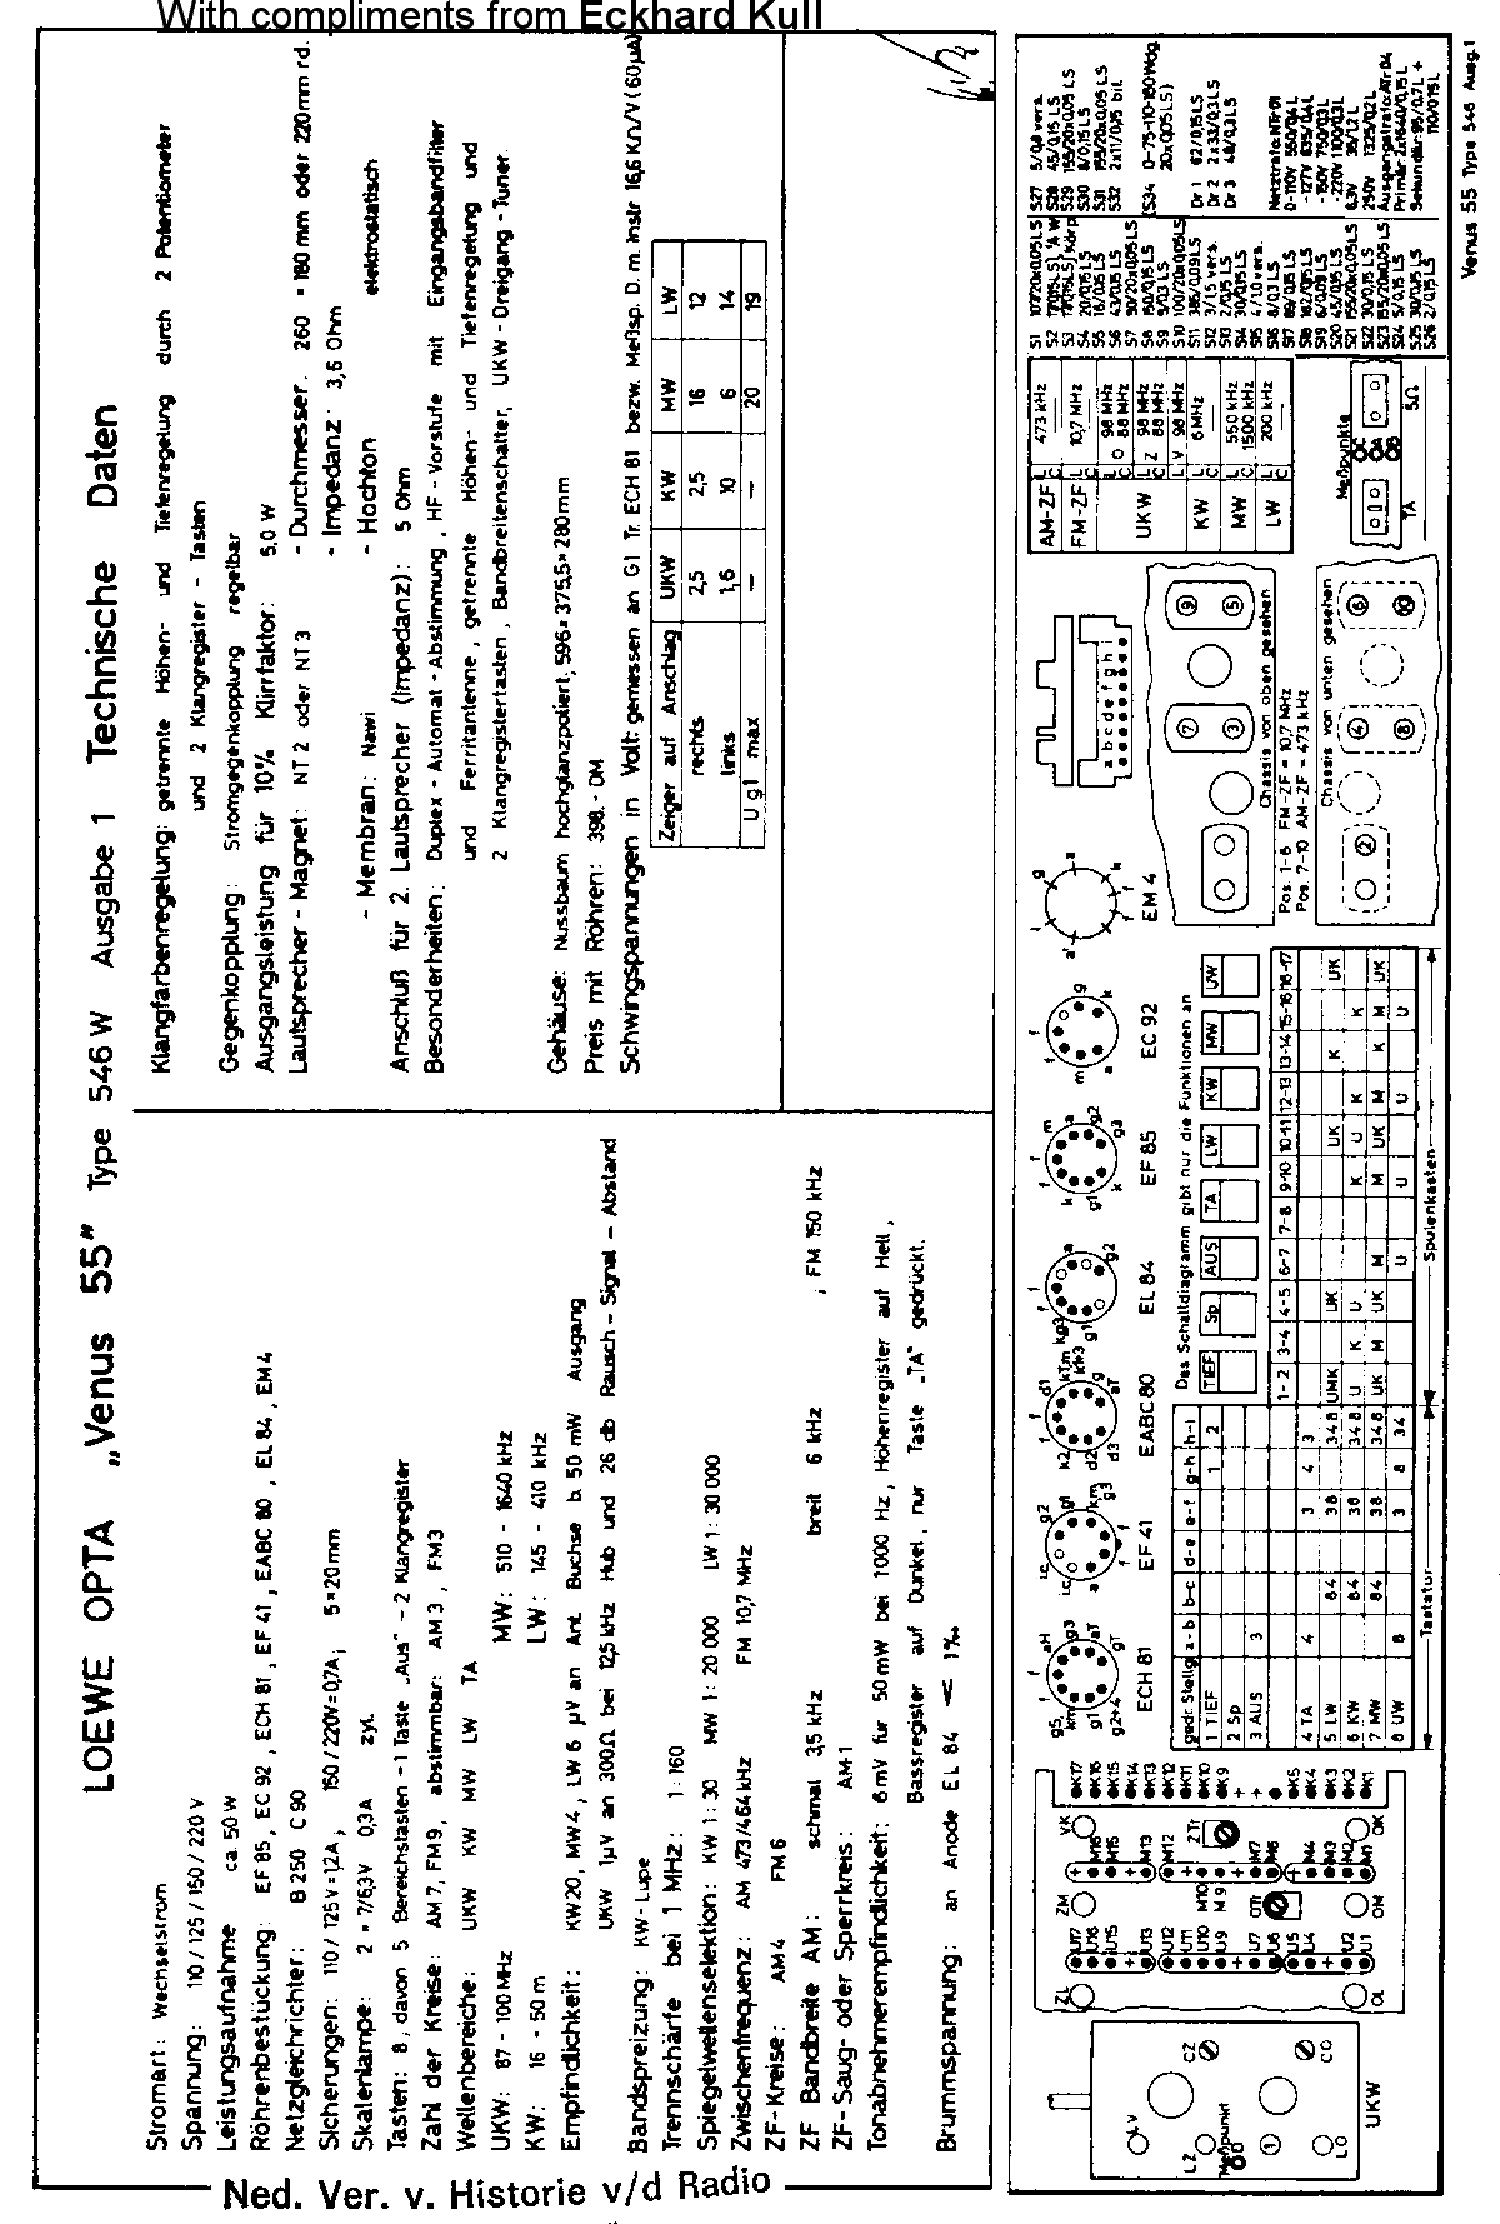 LOEWEOPTA 546W VENUS-55 AM-FM RECEIVER 1953 SM service manual (1st page)